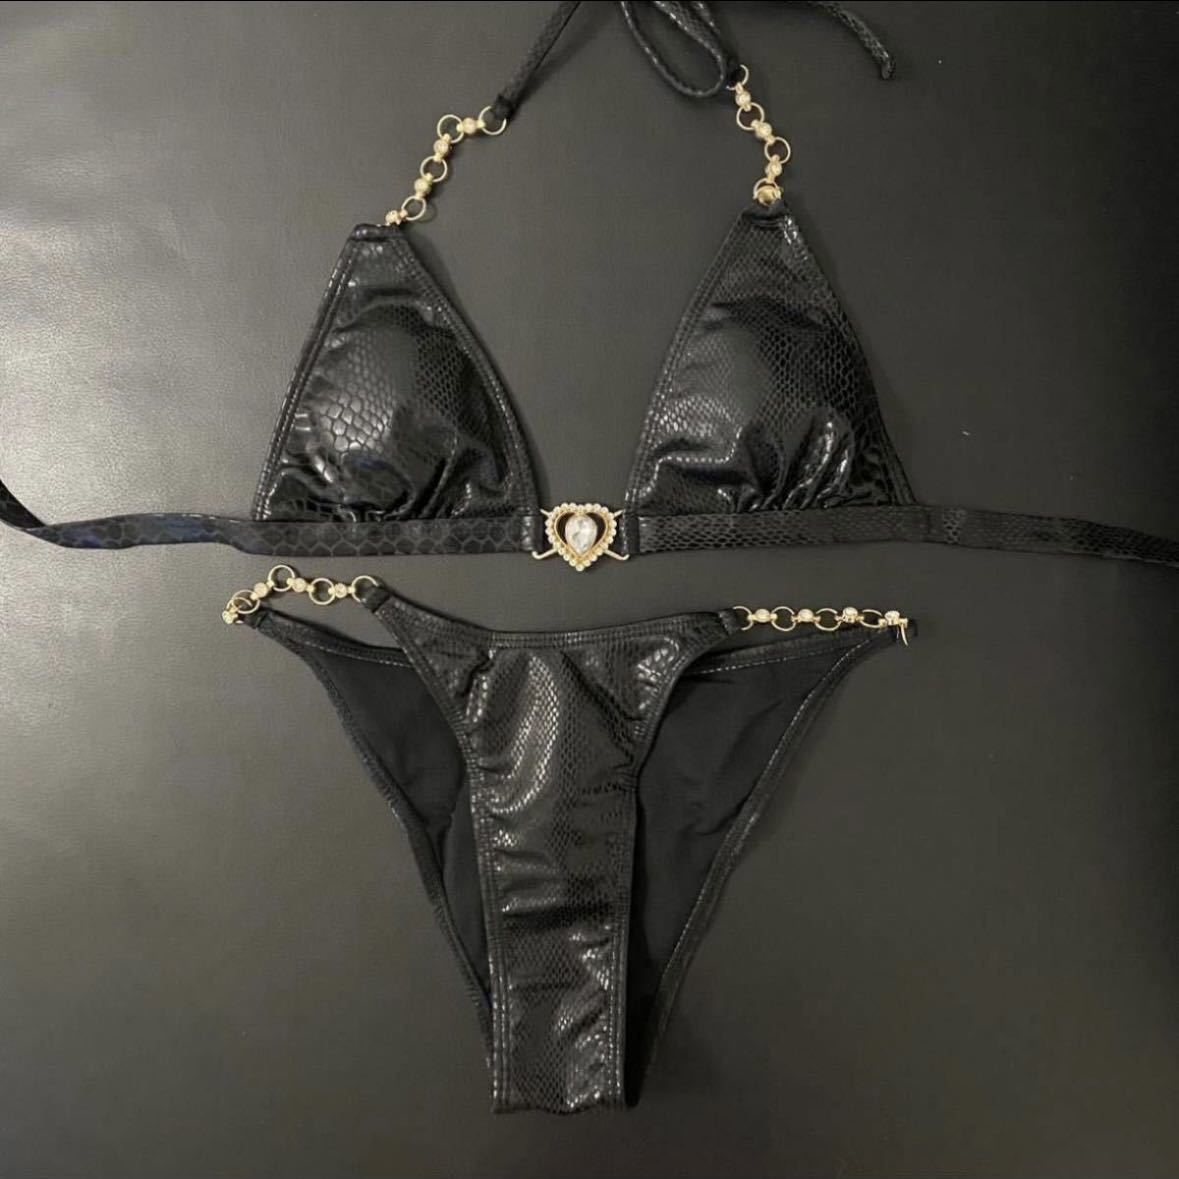  Heart charm attaching halter-neck bikini top and bottom set lady's swimsuit python print black black 